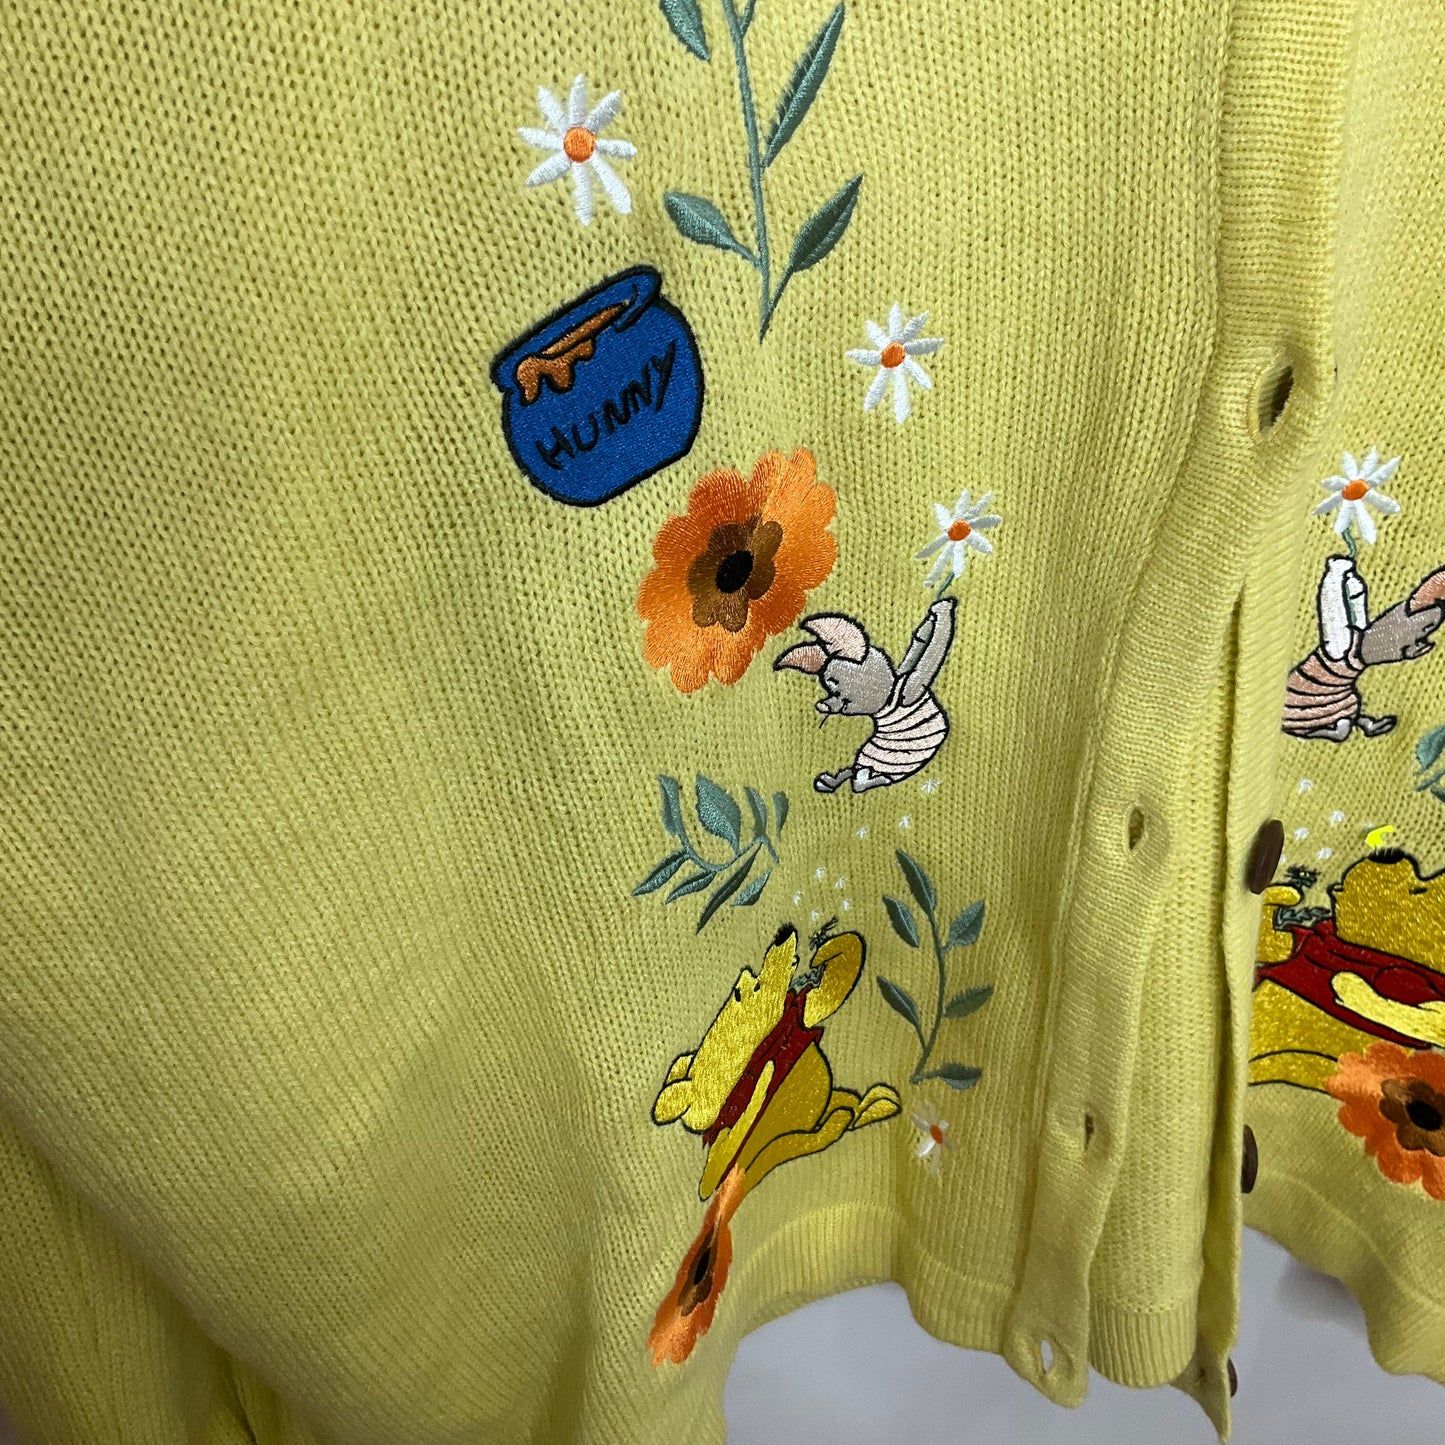 Yellow Sweater Cardigan Disney Store, Size 4x